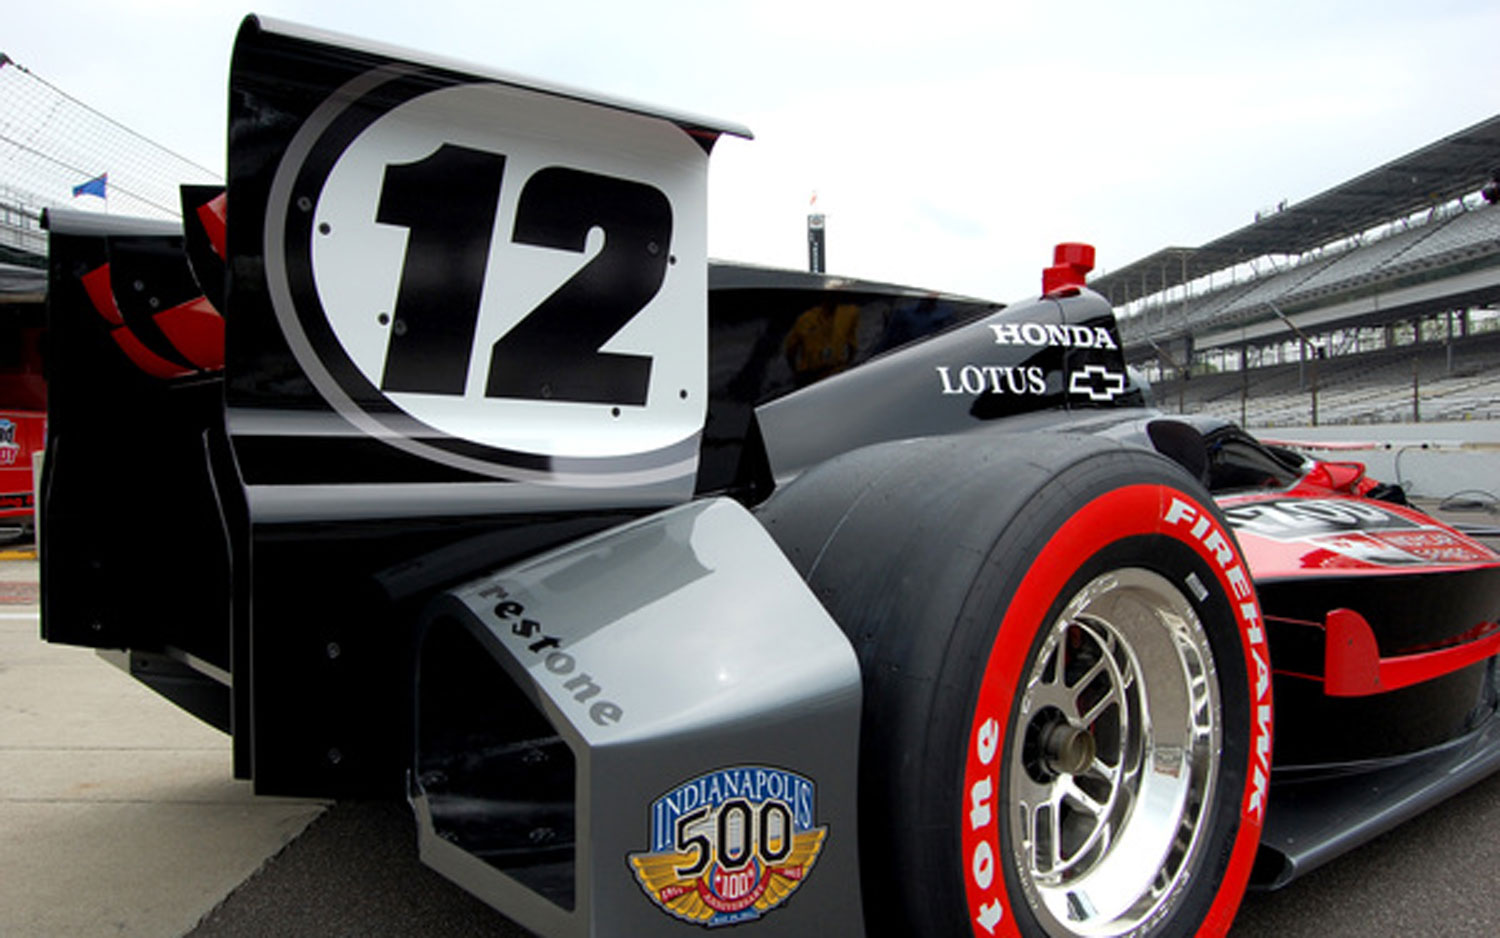 IZOD to split with Indycar after 2013